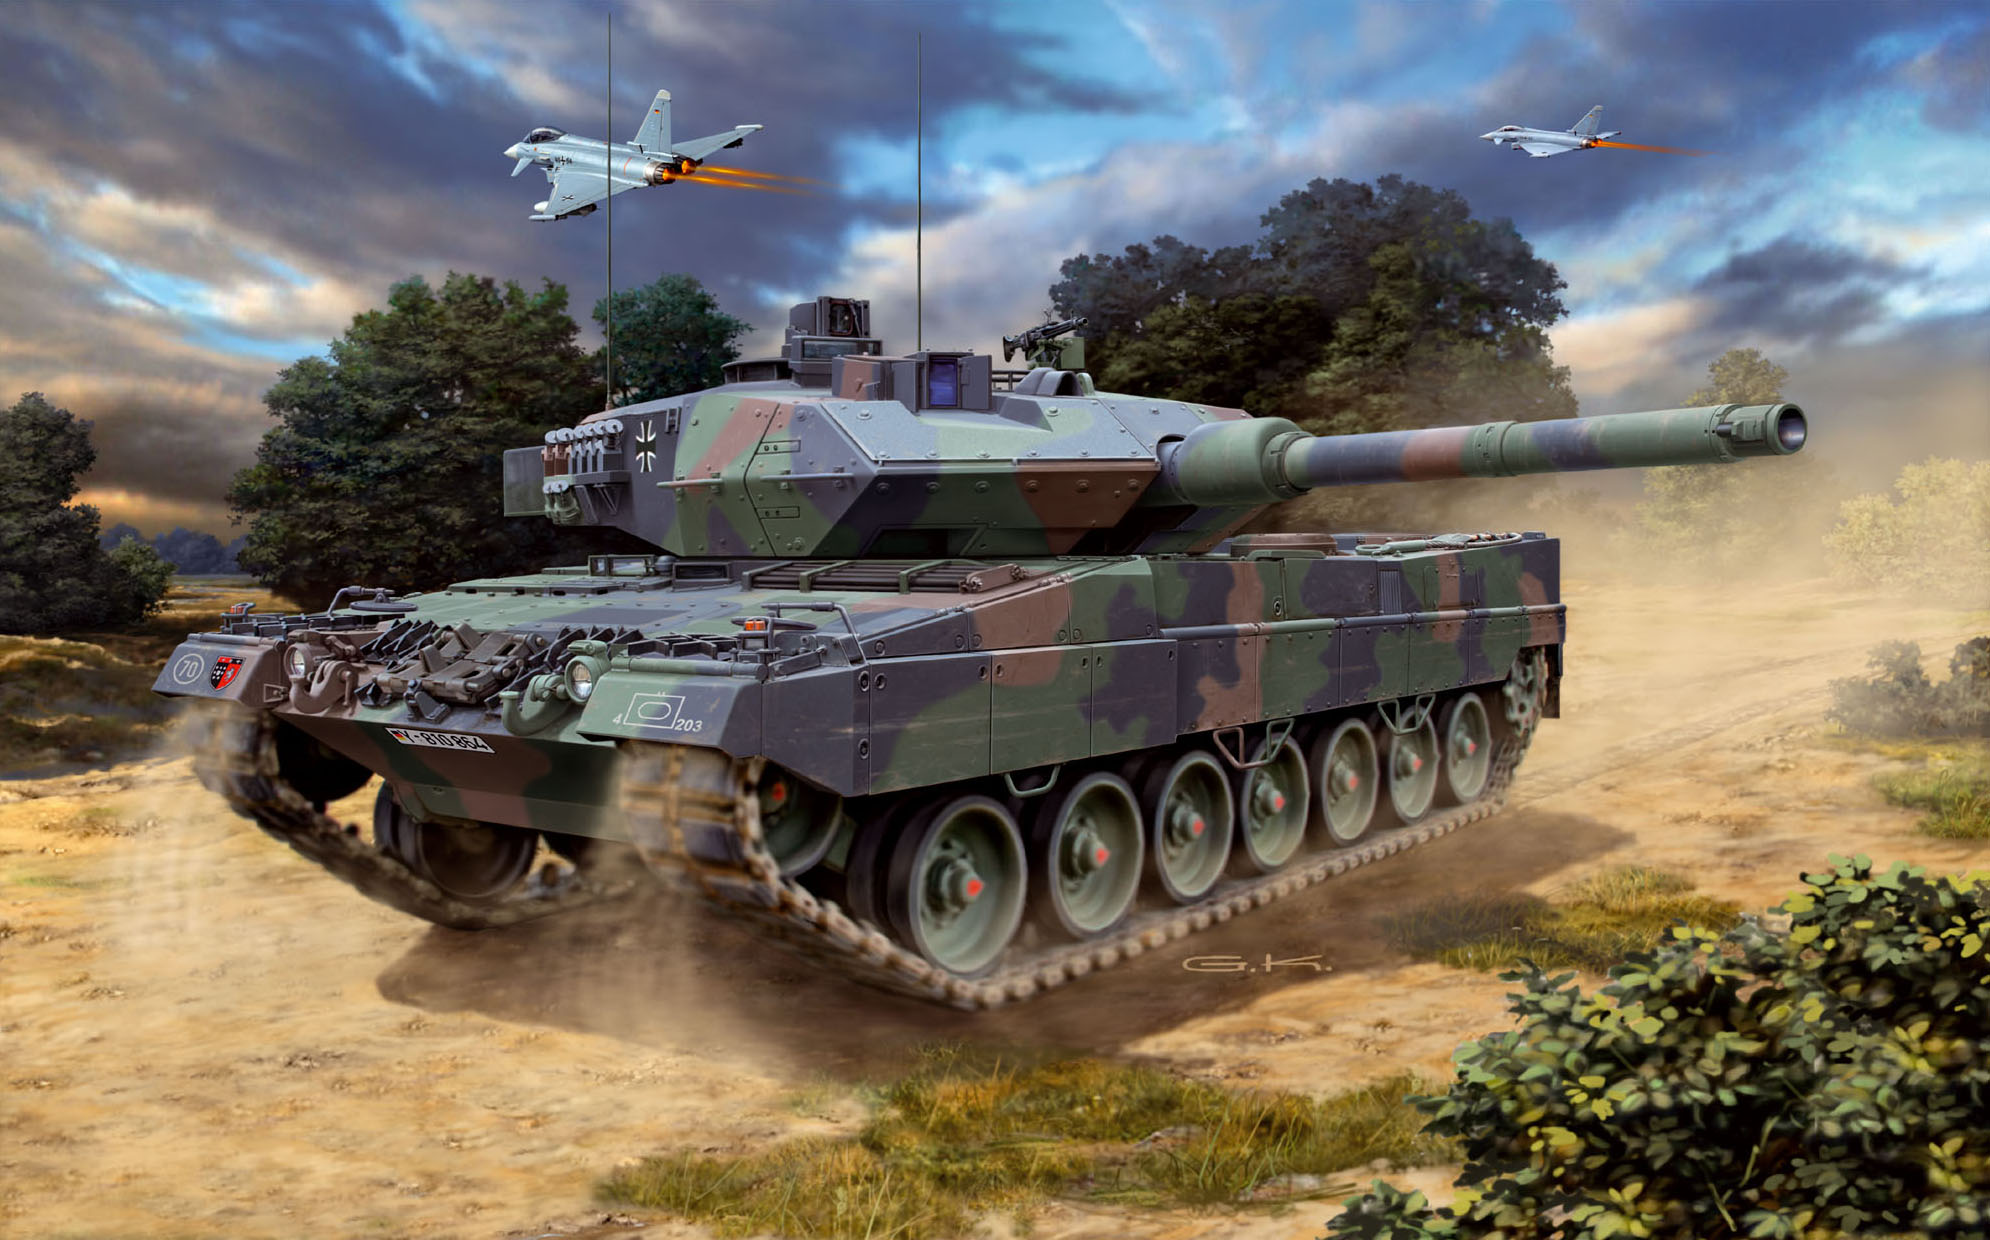 Revell - Model Set, Leopard 2A6/A6M 63180